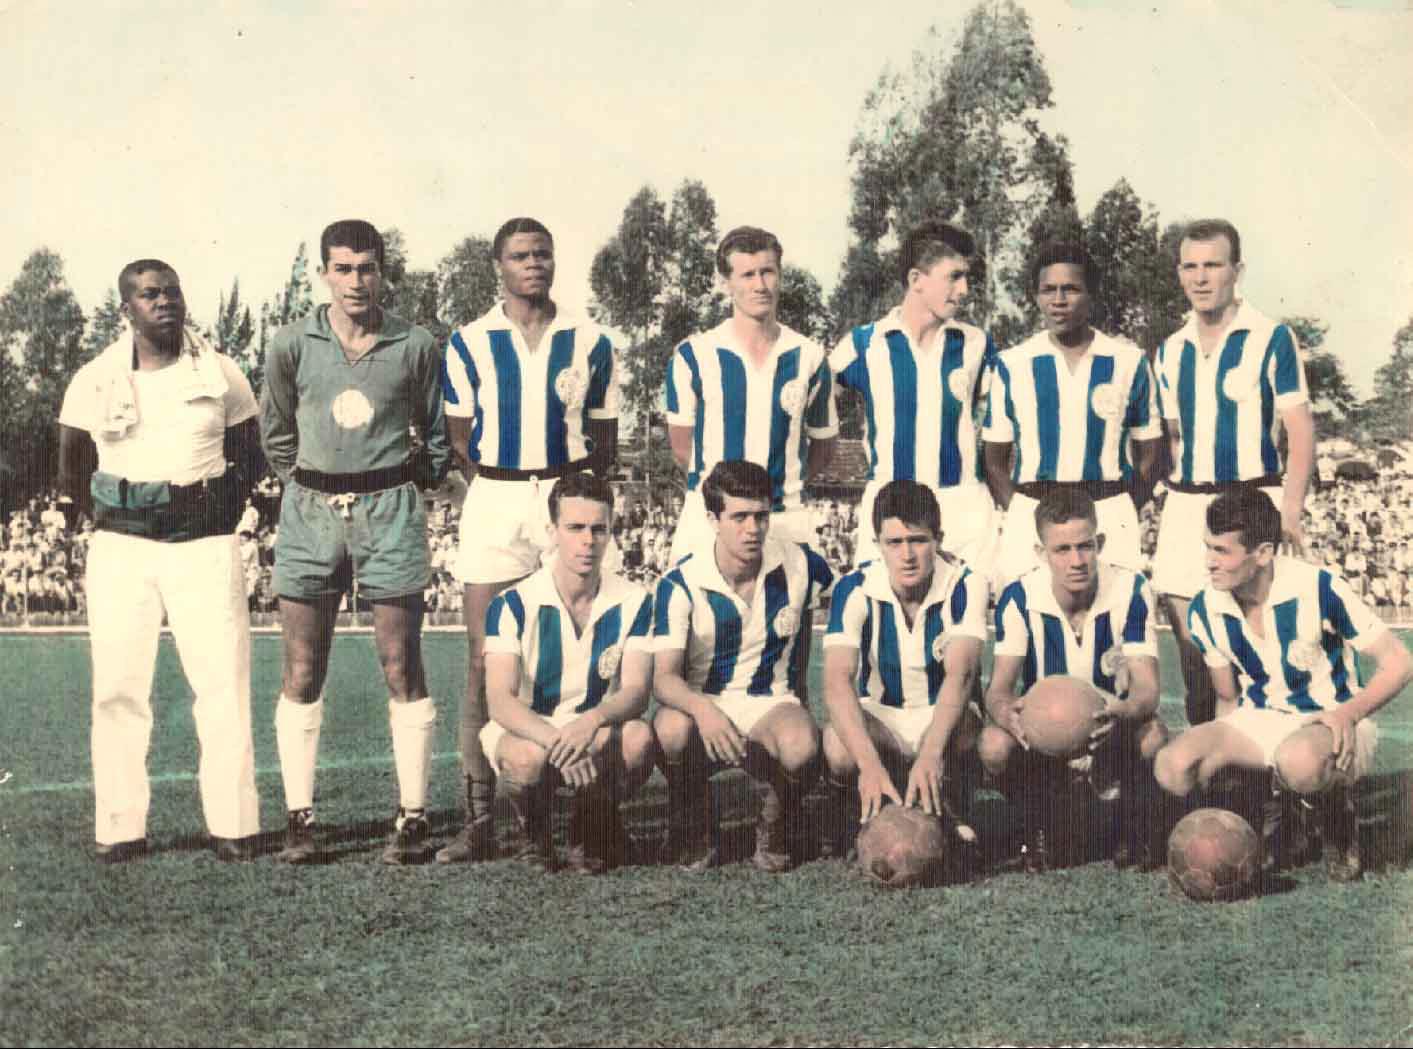 Futebol no São Carlos Clube 